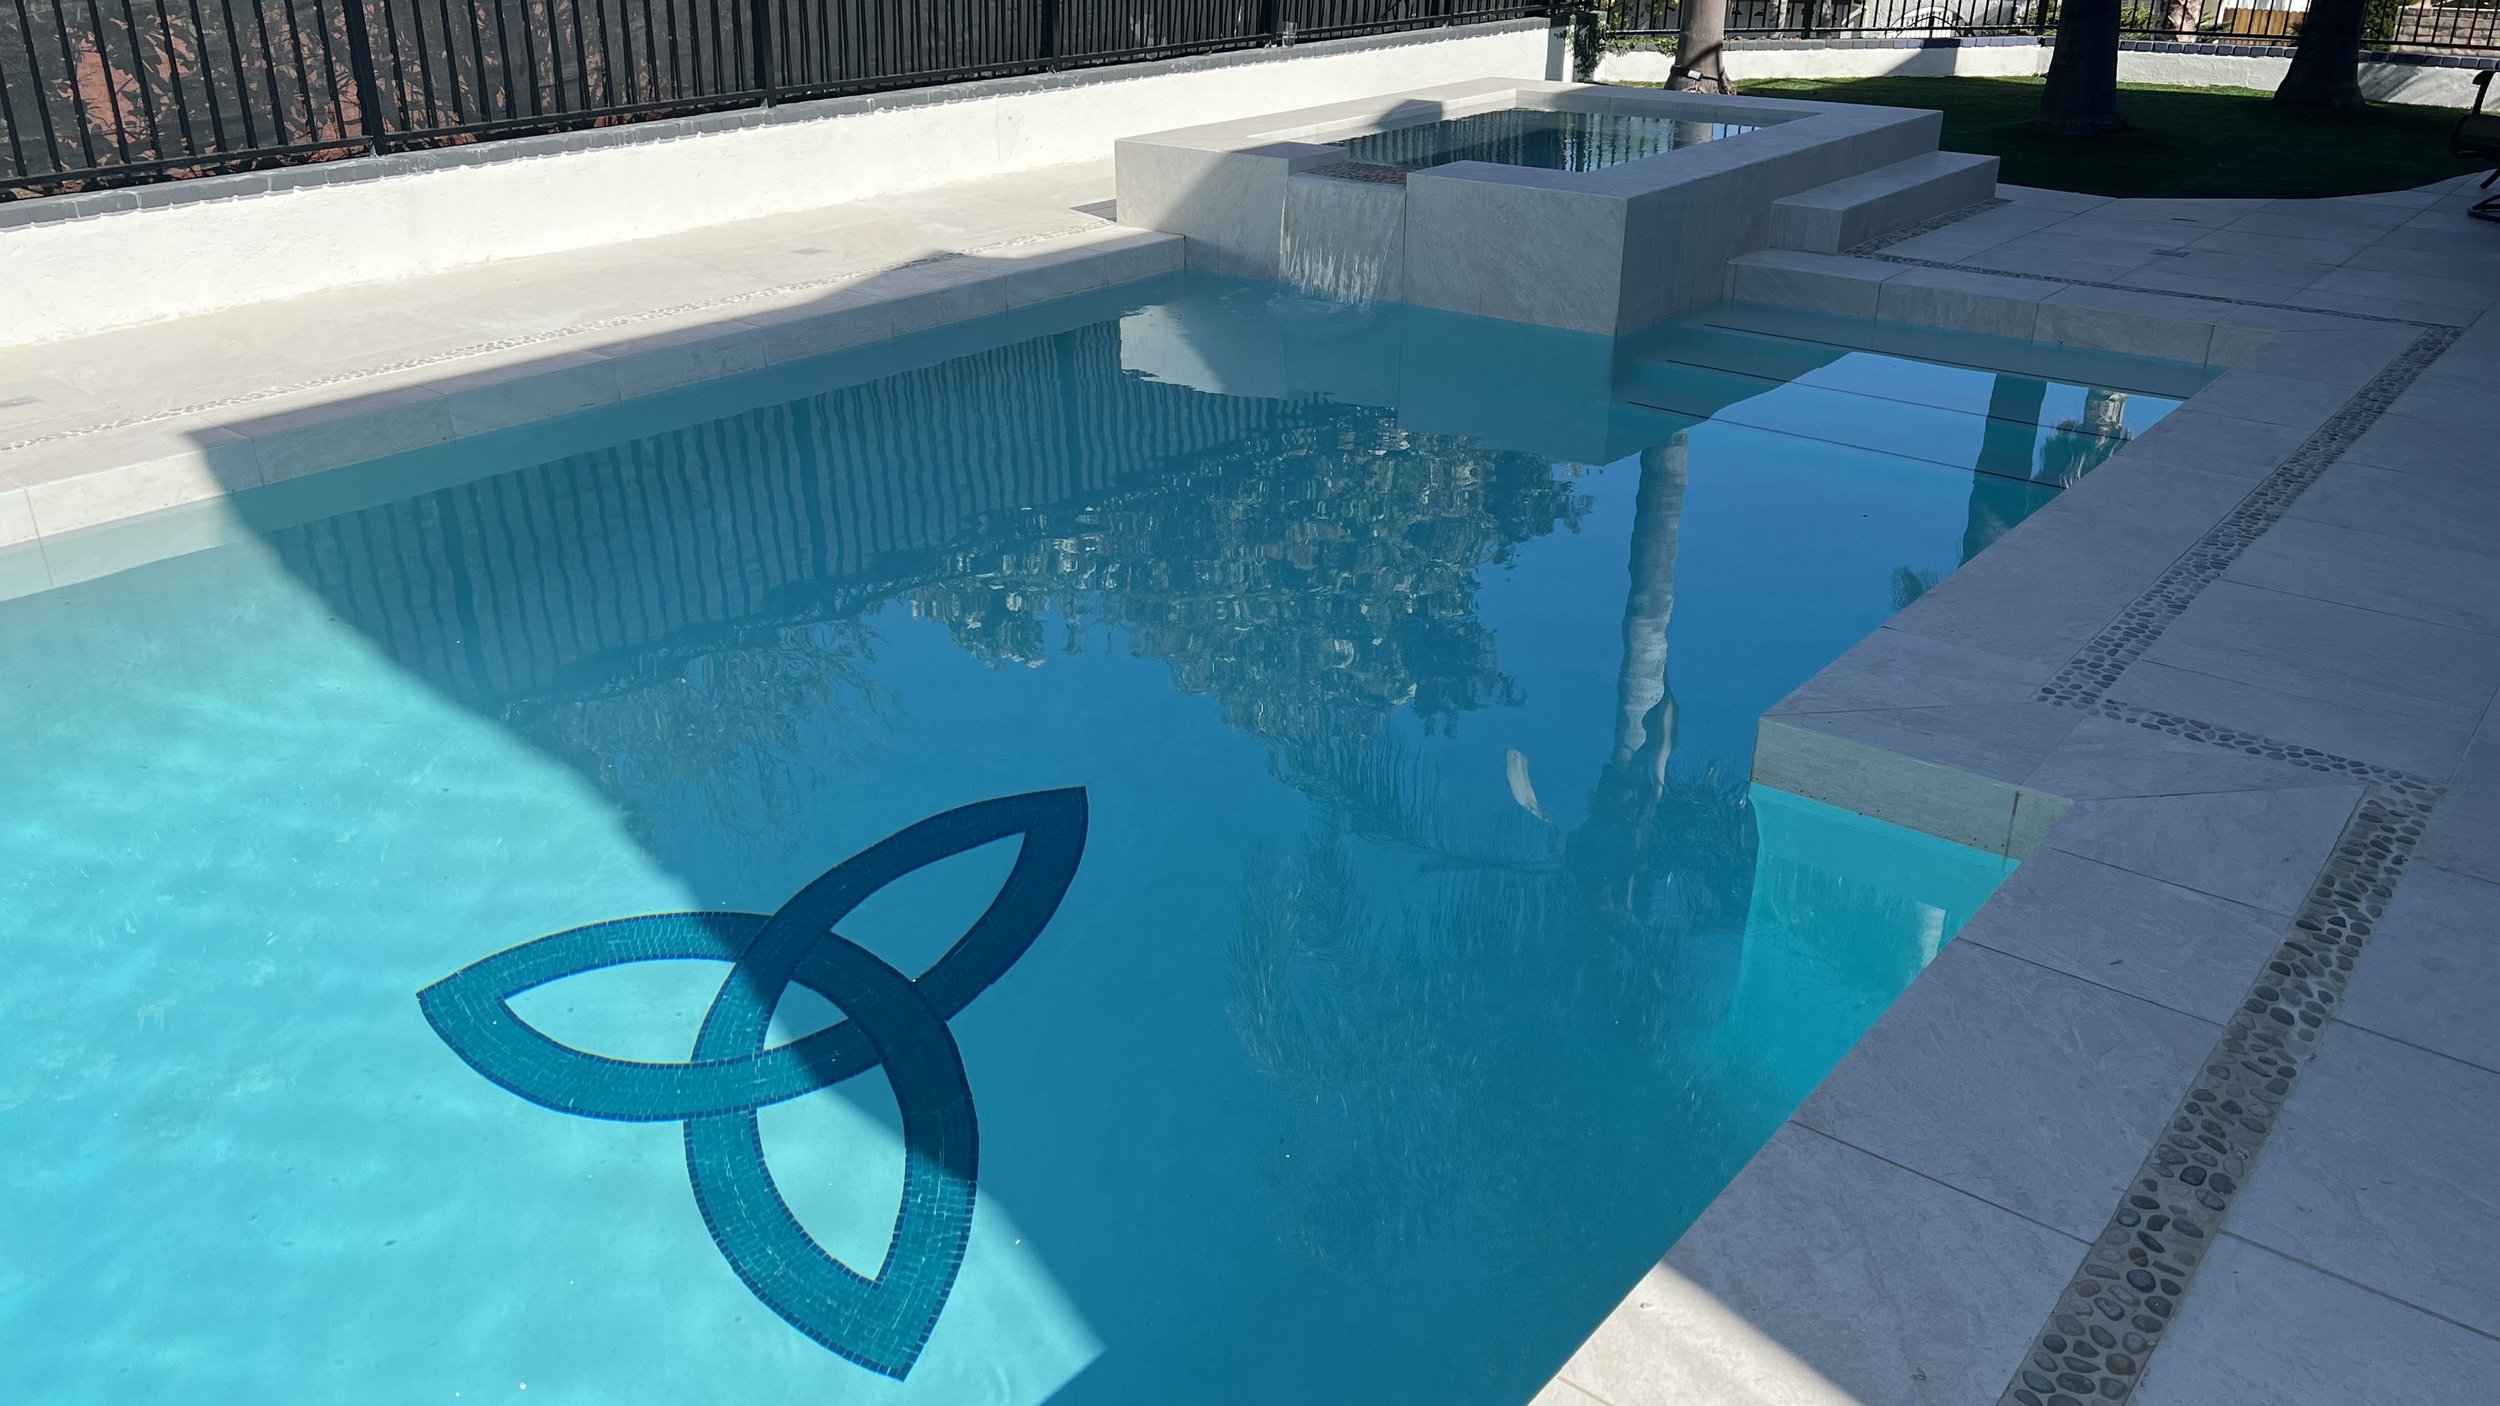 Los Angeles Pool Install